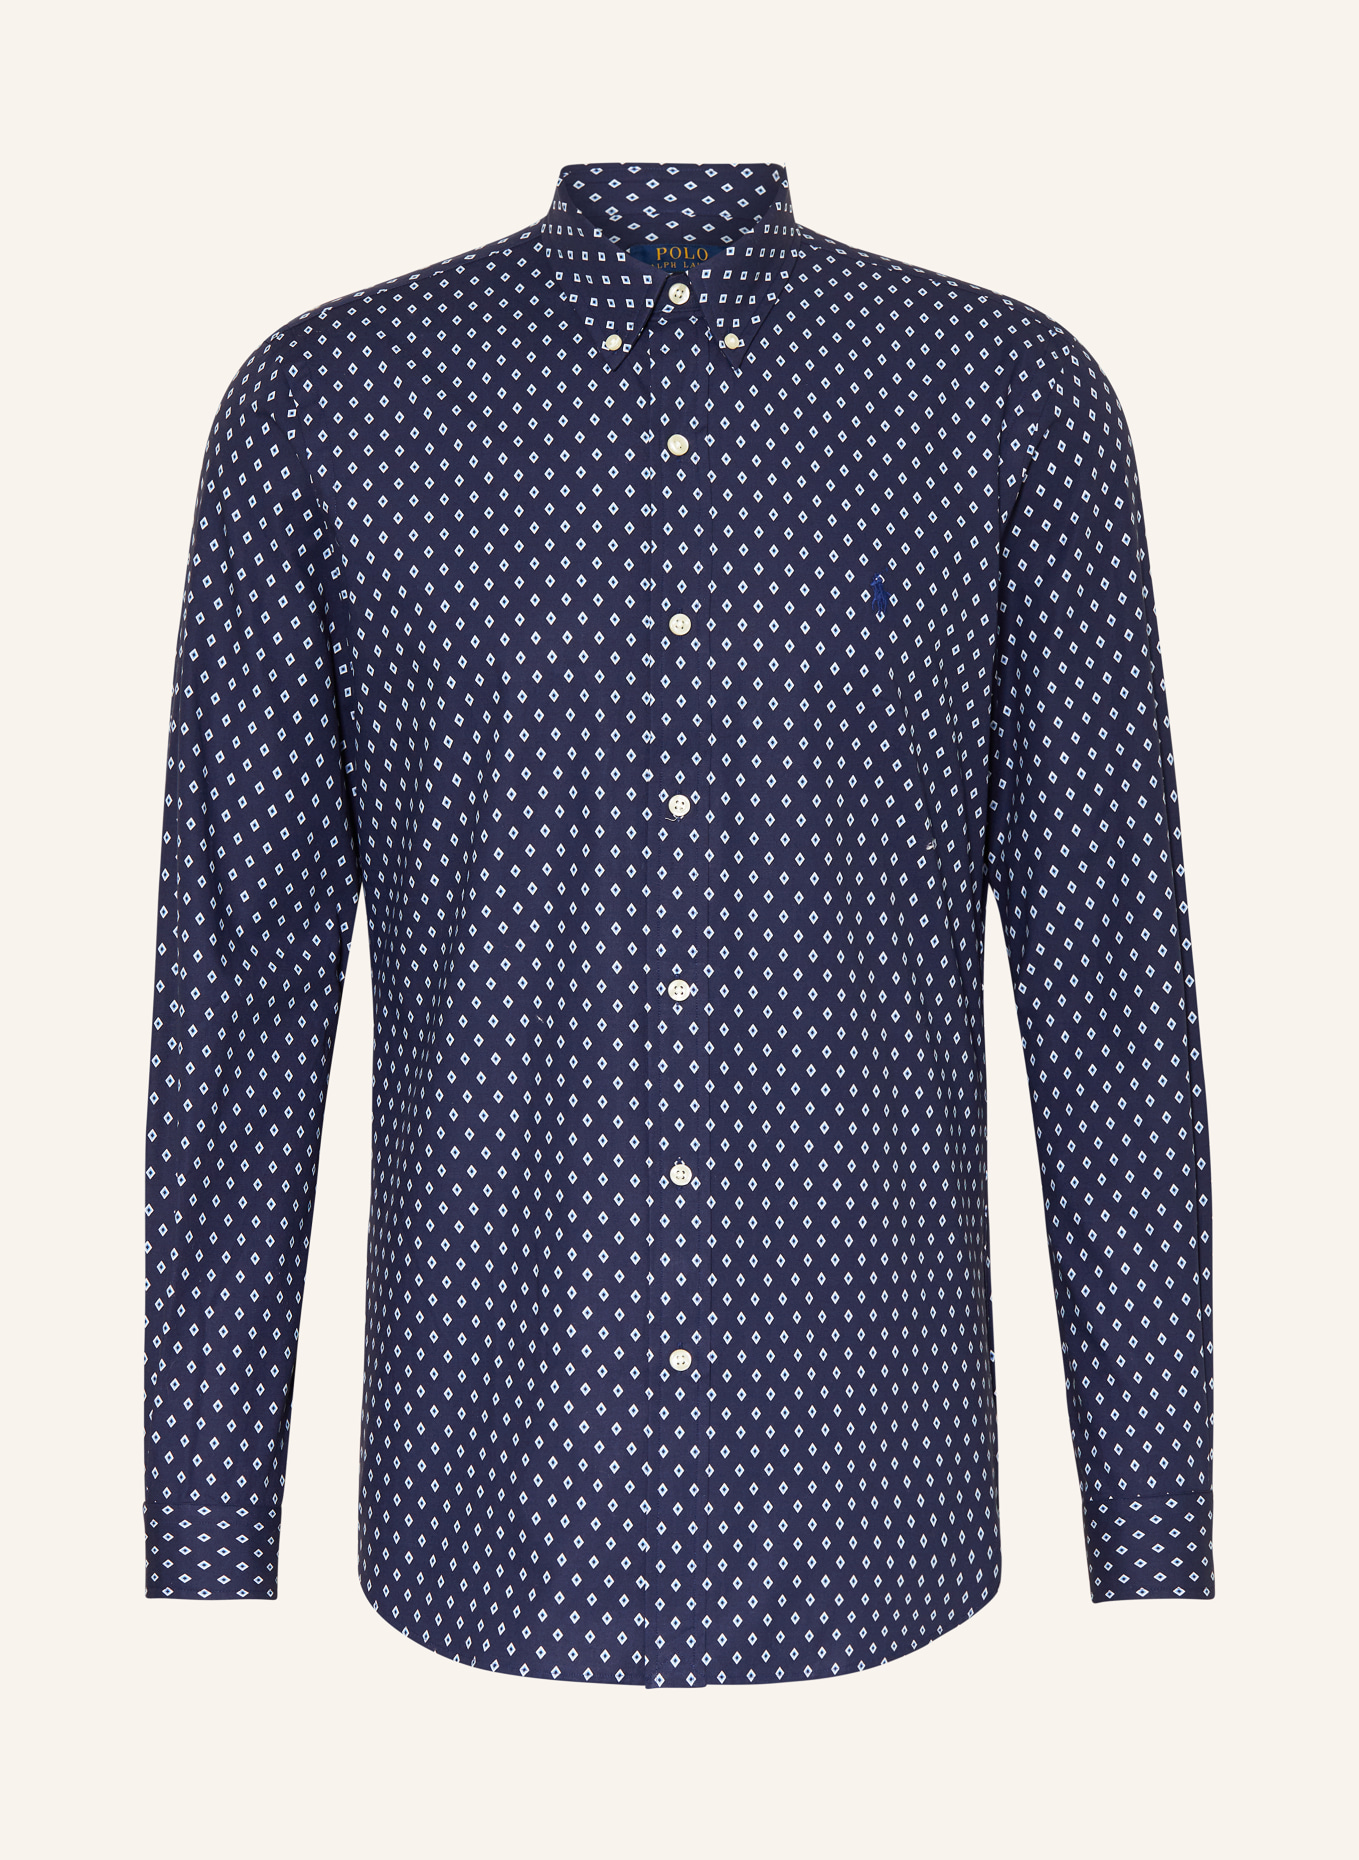 POLO RALPH LAUREN Hemd Slim Fit, Farbe: DUNKELBLAU/ WEISS/ HELLBLAU (Bild 1)